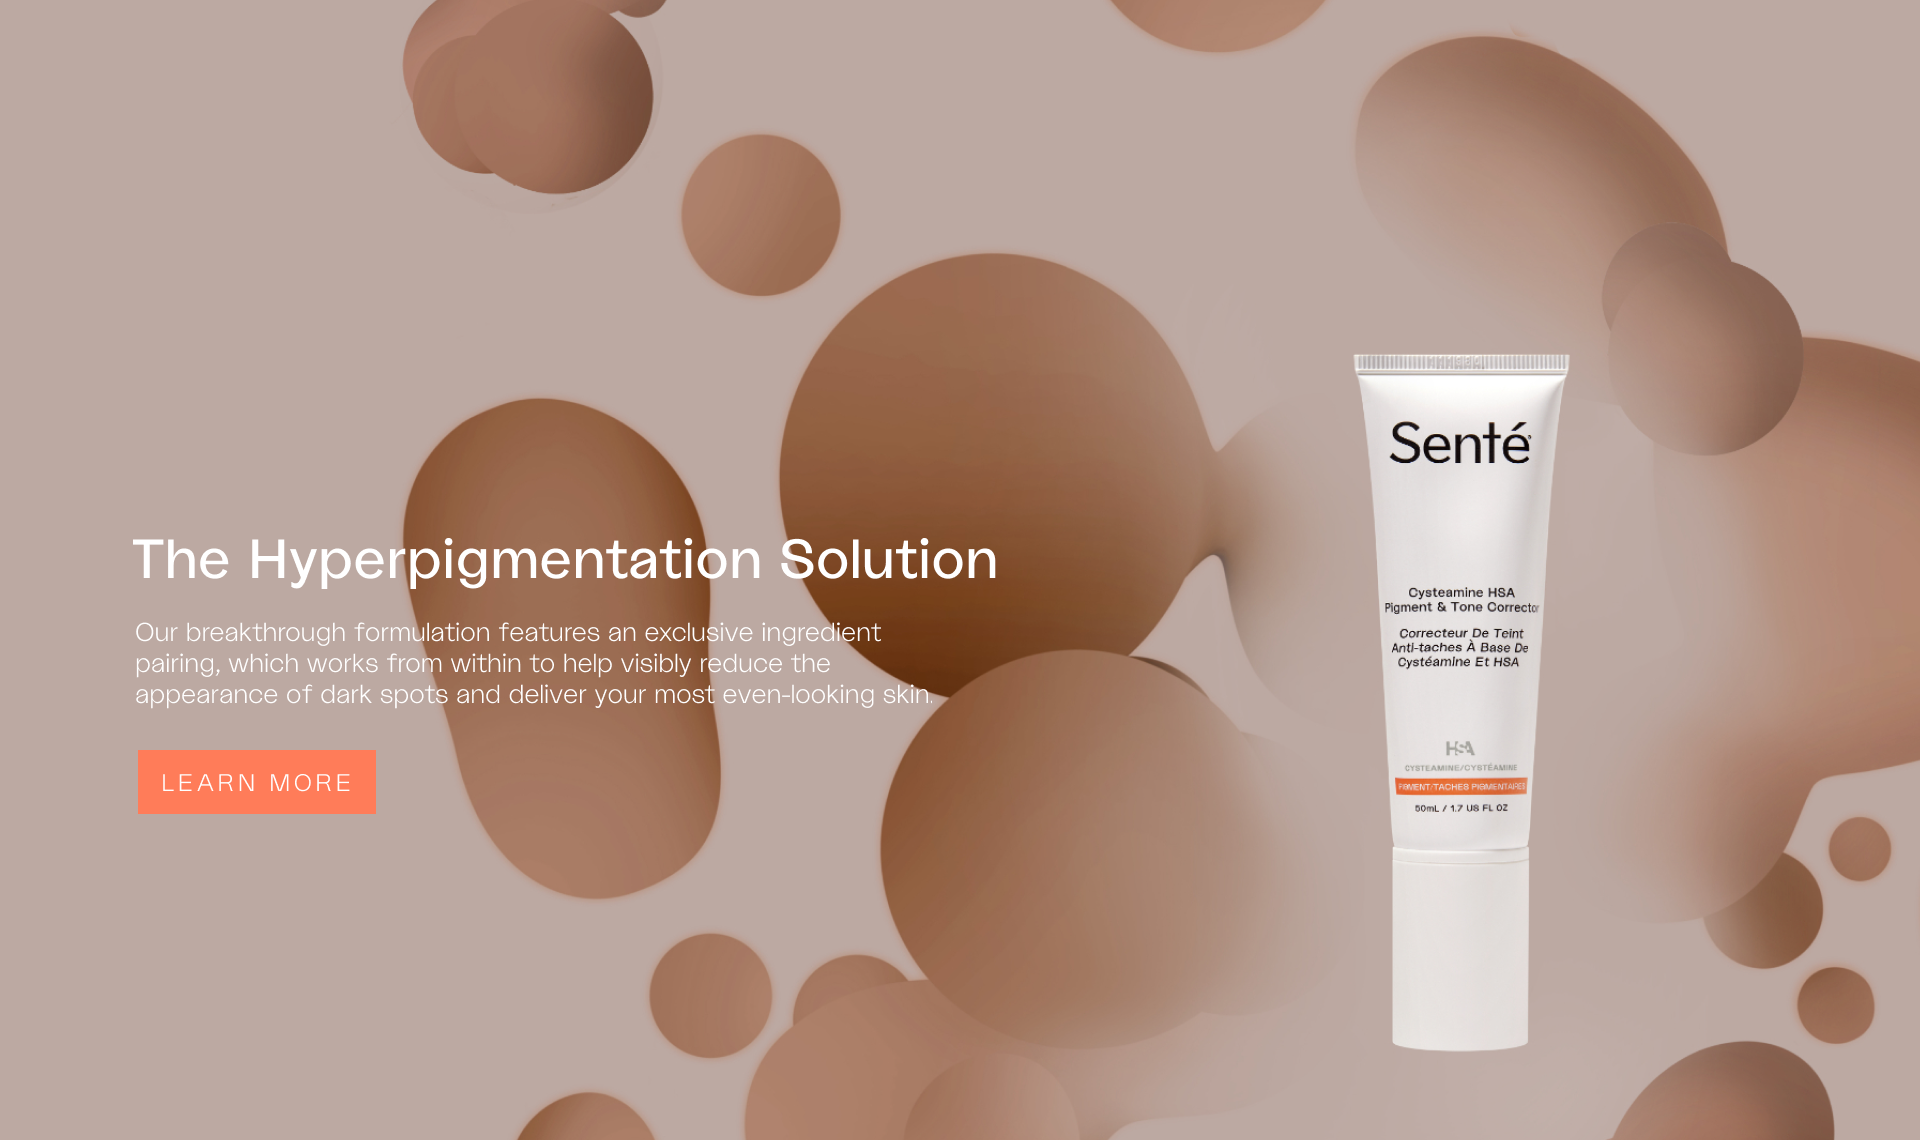 Senté Cysteamine HSA Pigment & Tone Corrector (1.69 oz) & Serum Bio Complete Serum (0.33 oz) Duo